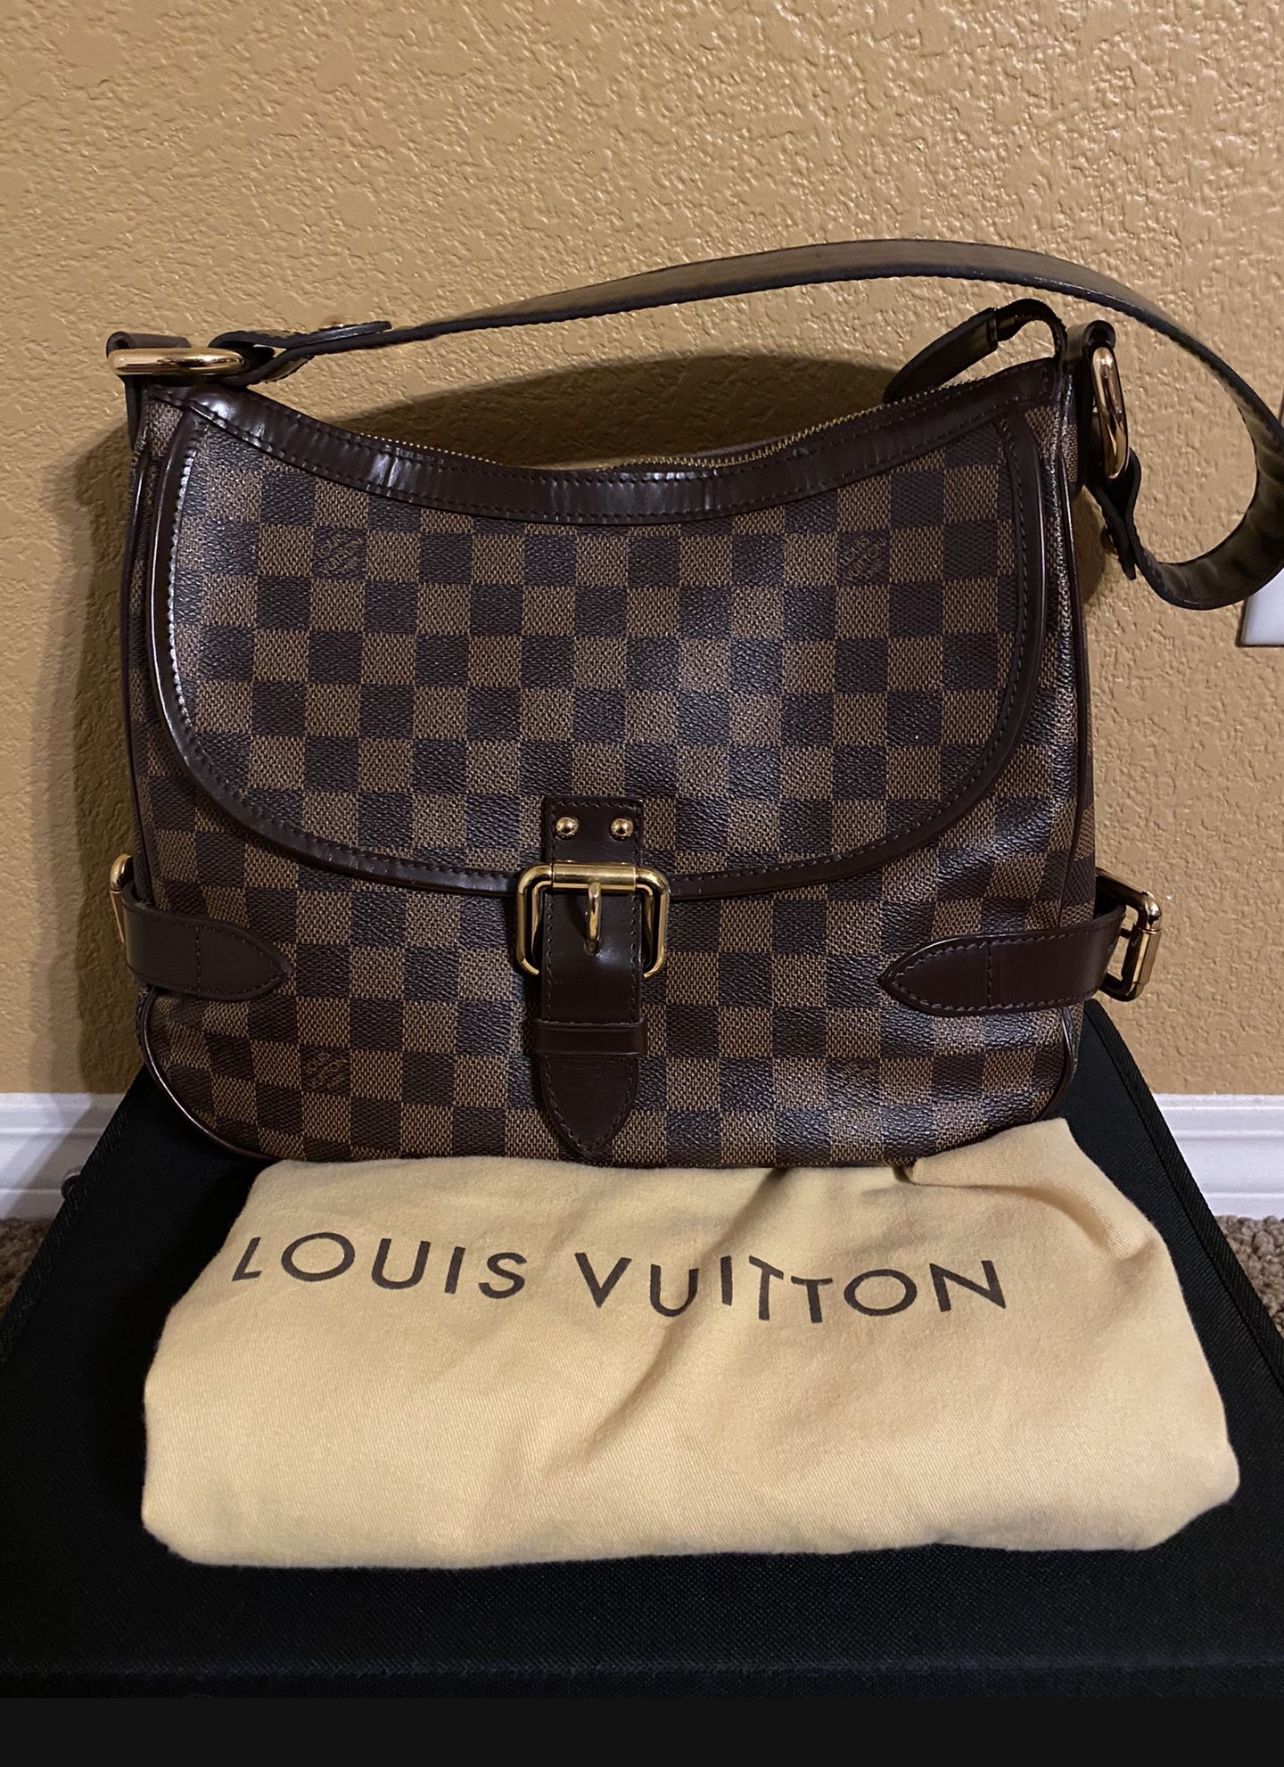 Louis Vuitton Handbag for Sale in Temecula, CA - OfferUp